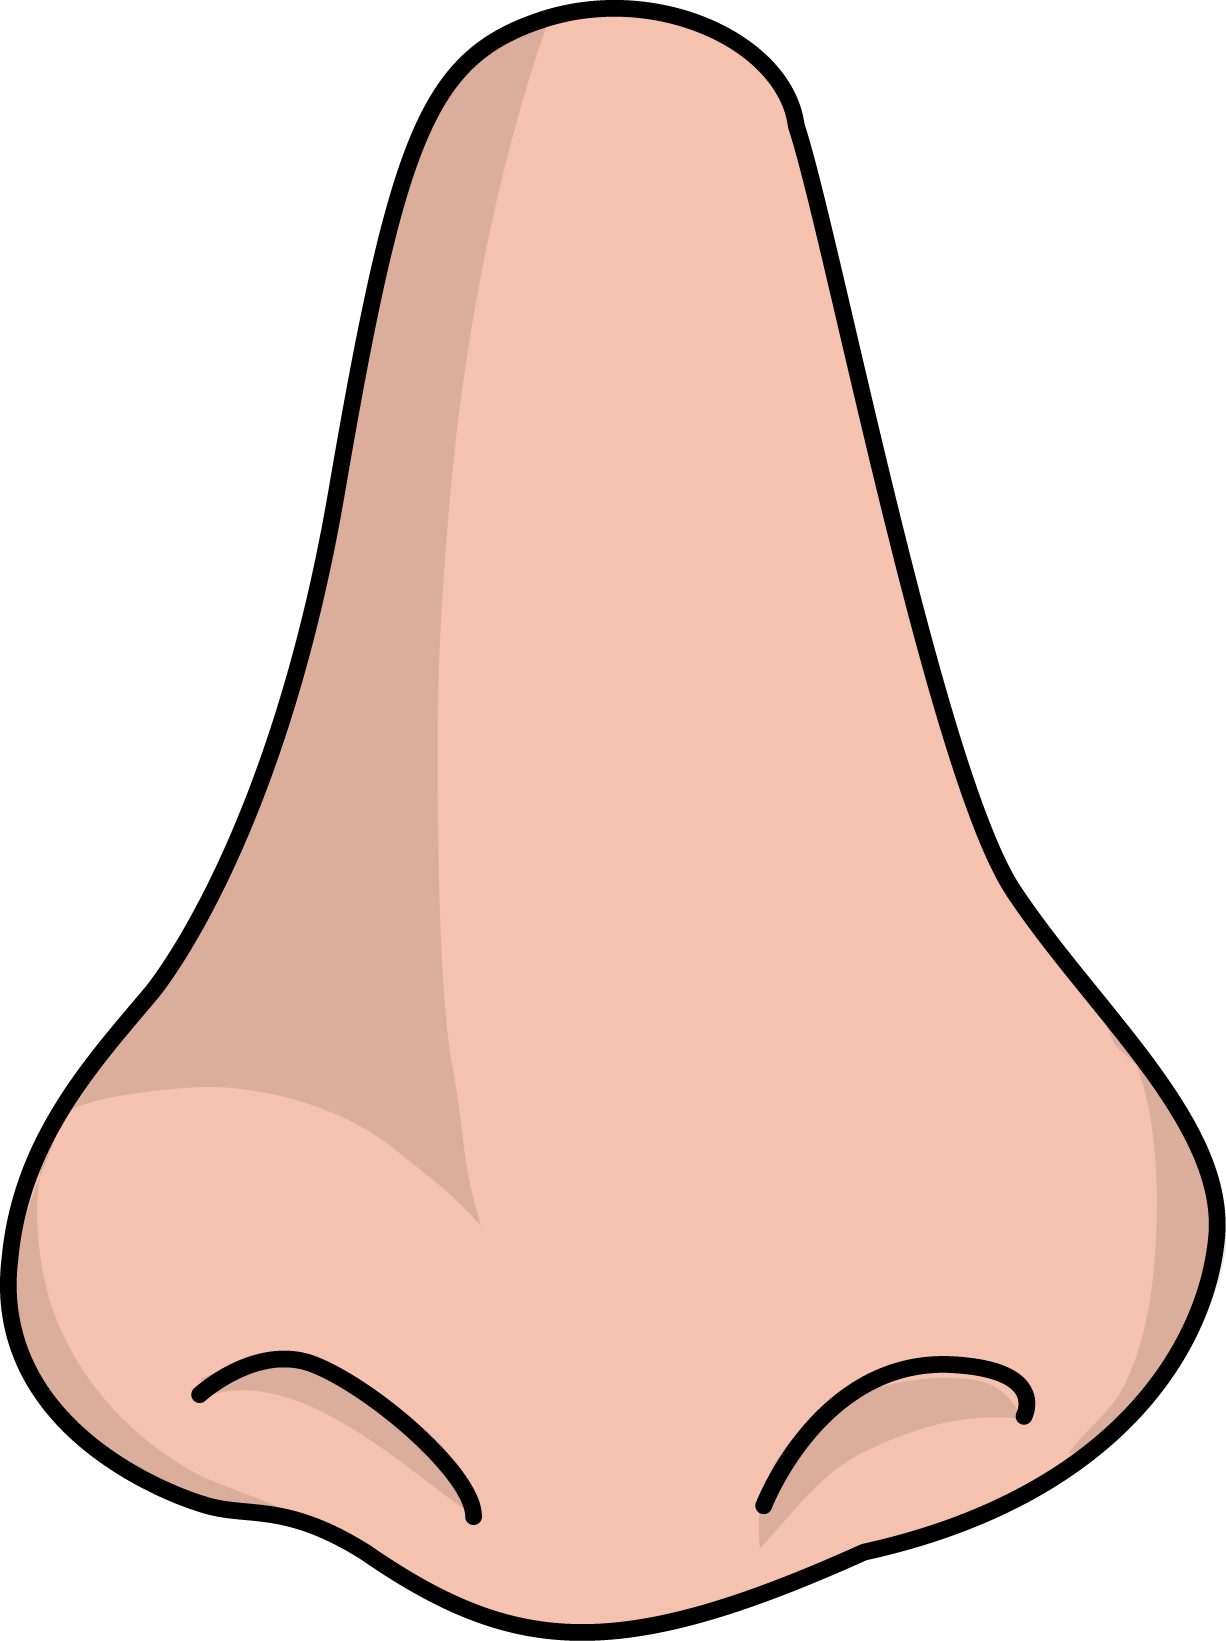 Human Nose PNG Image